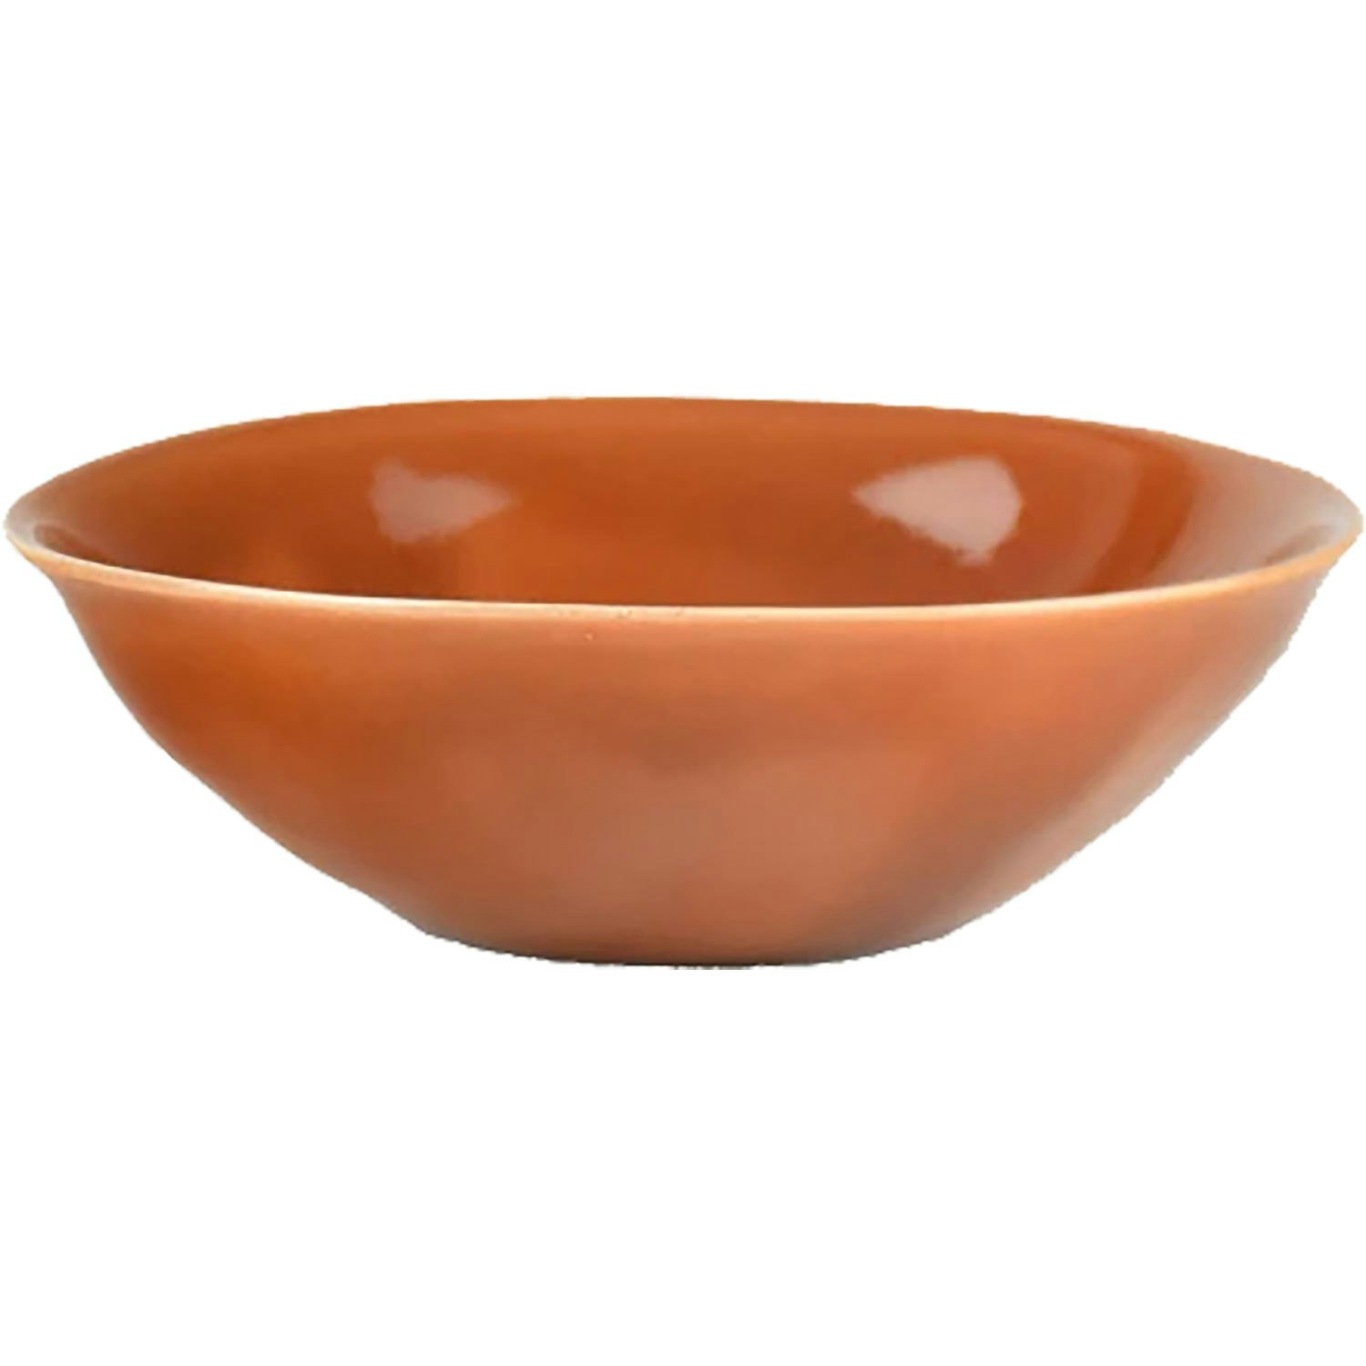 Bowl 19 cm, Smooth Terracotta